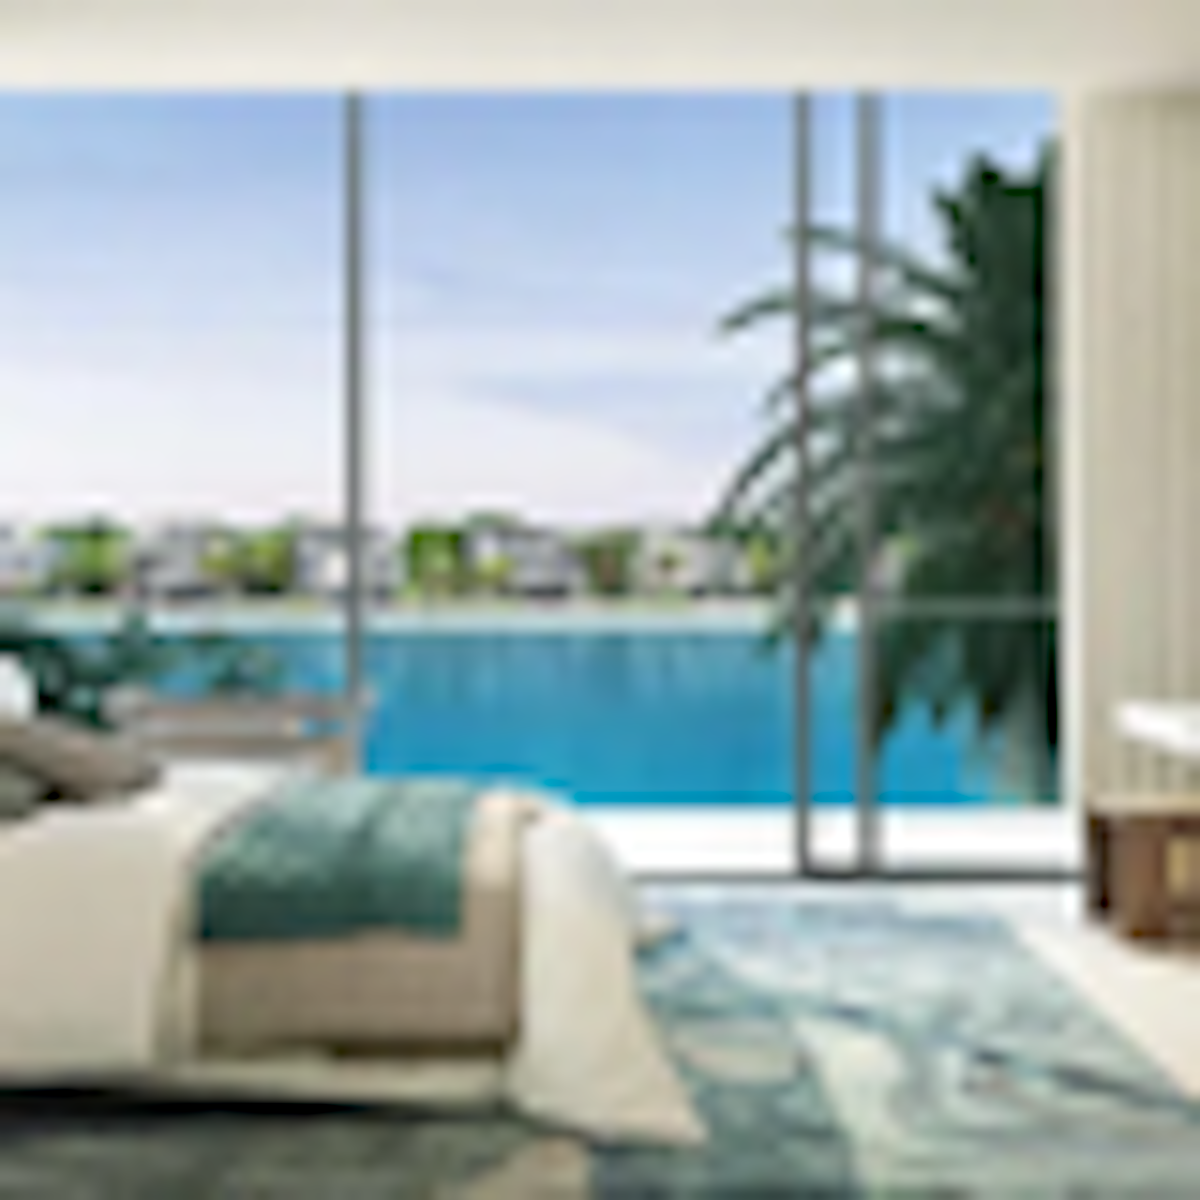 Palm Jebel Ali| Beach Villas|Private Luxury Living